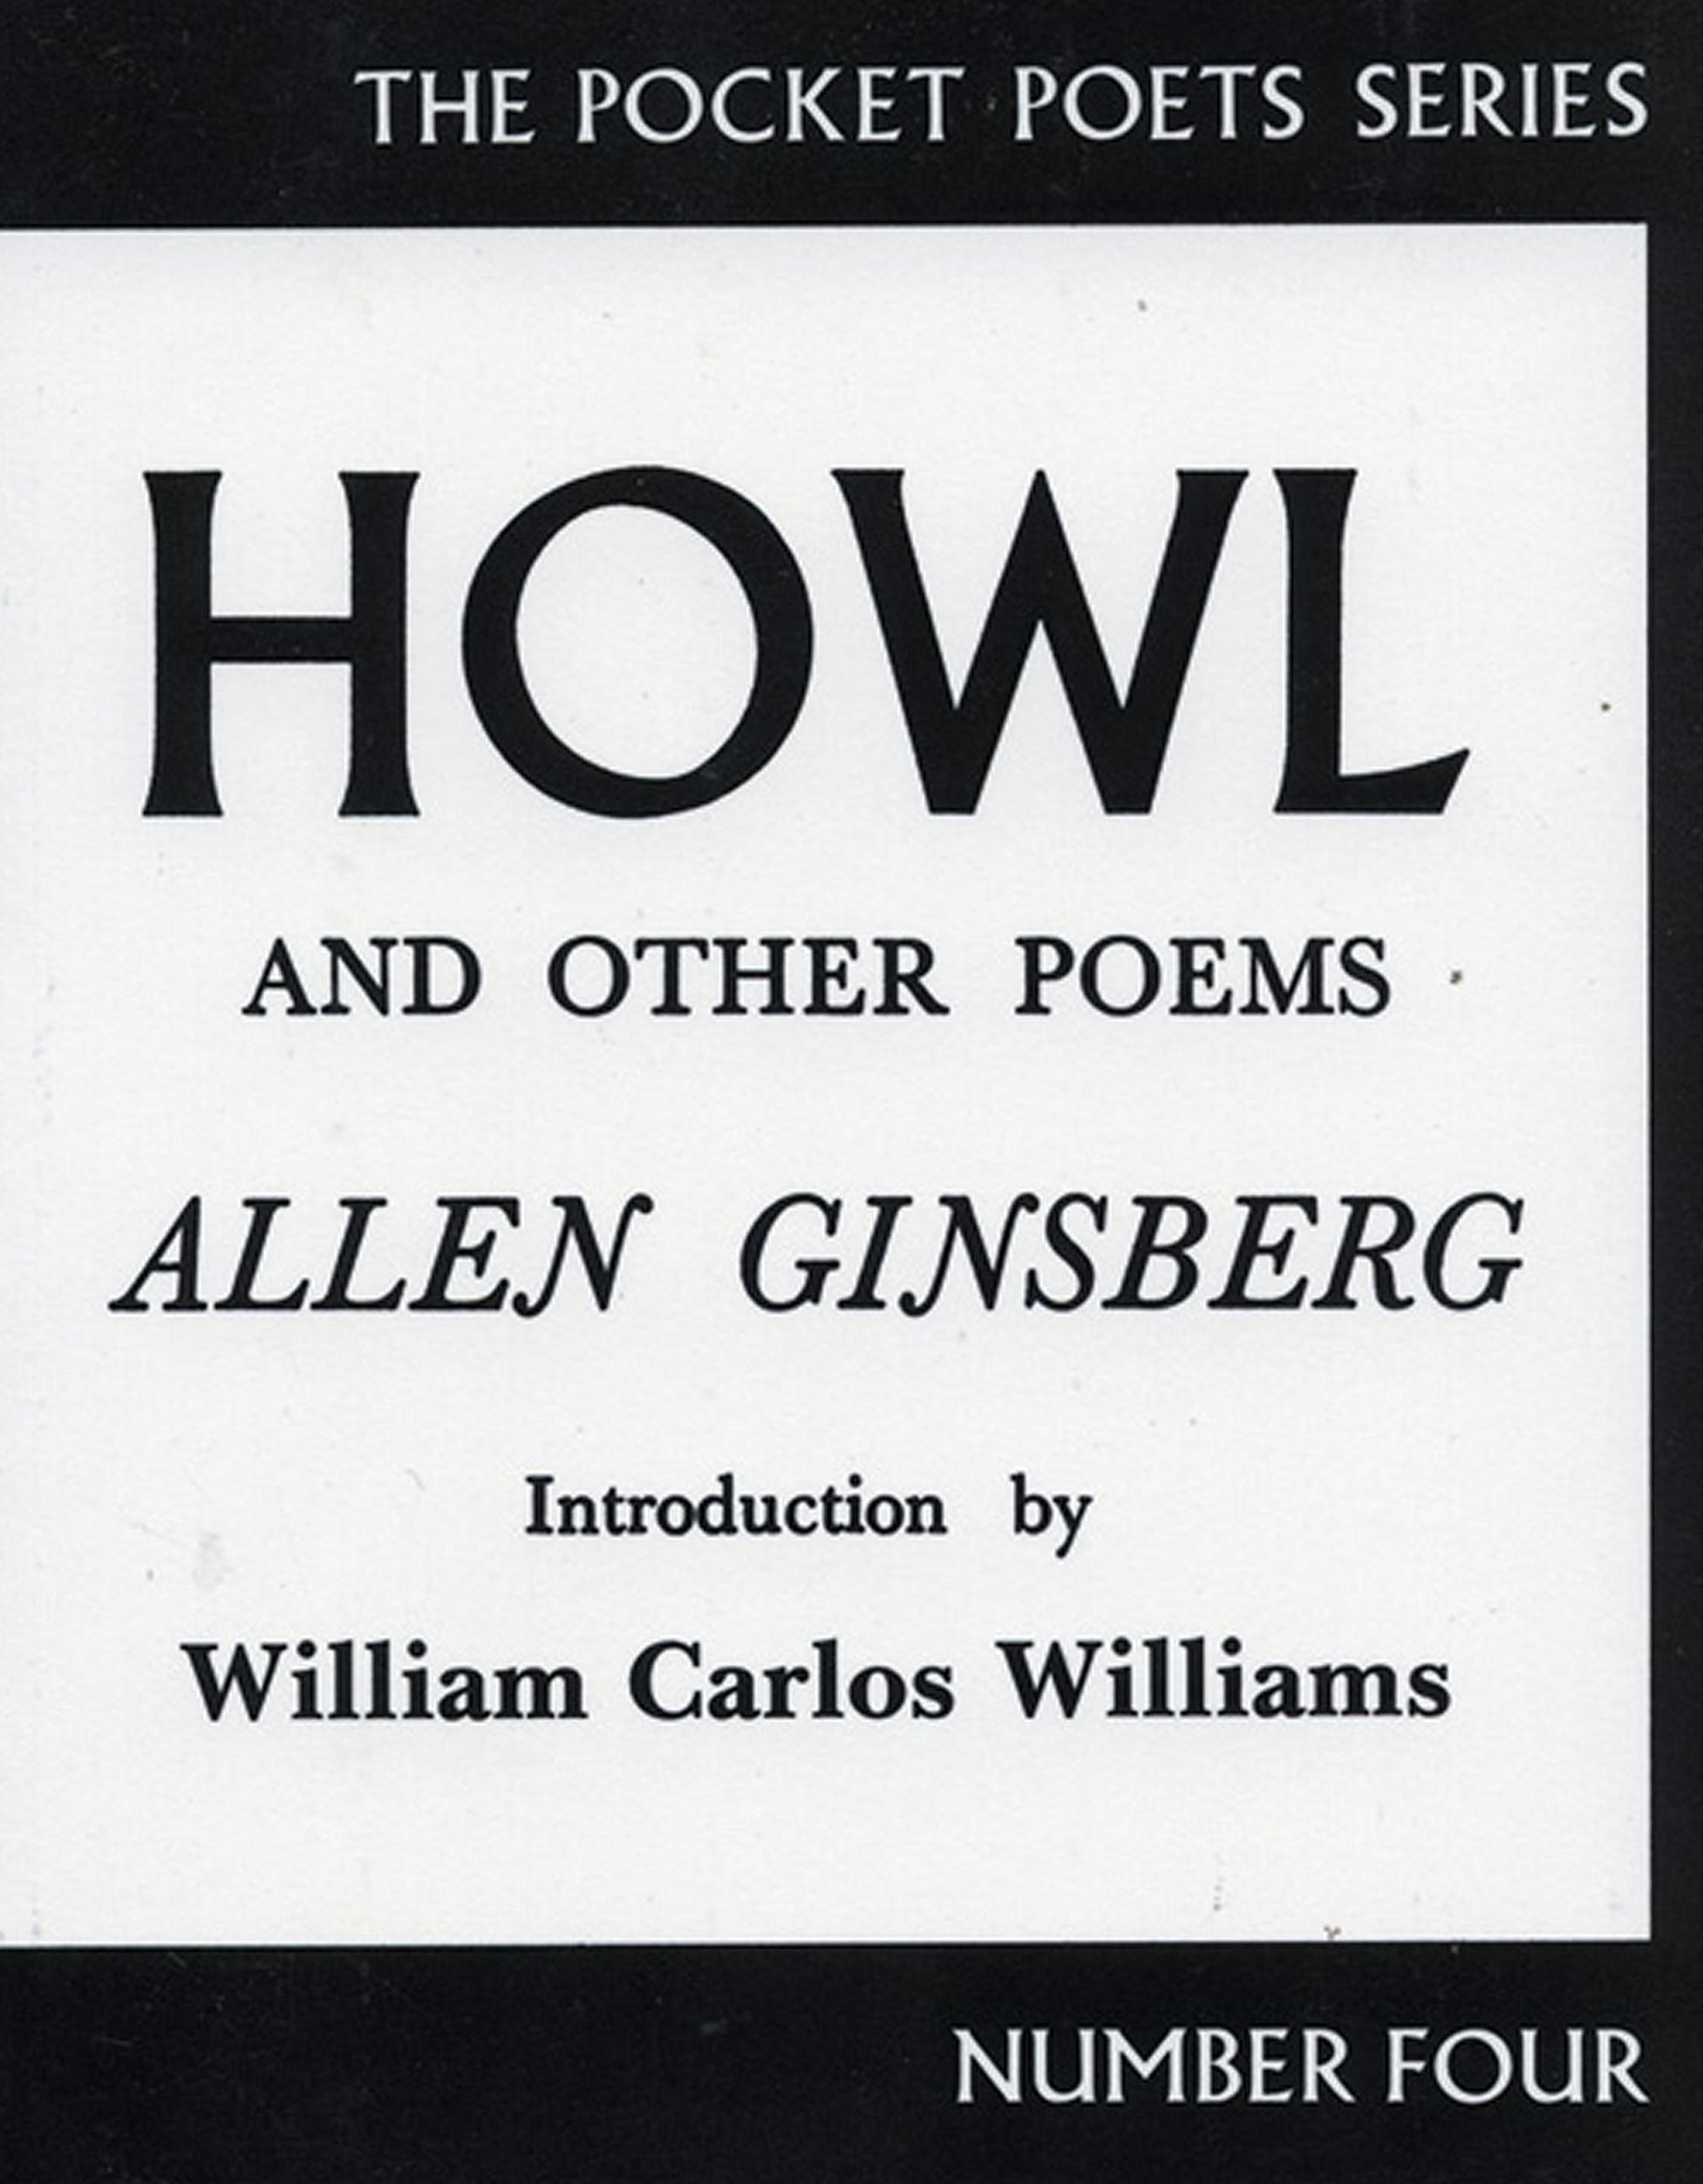 Howl - listen book free online